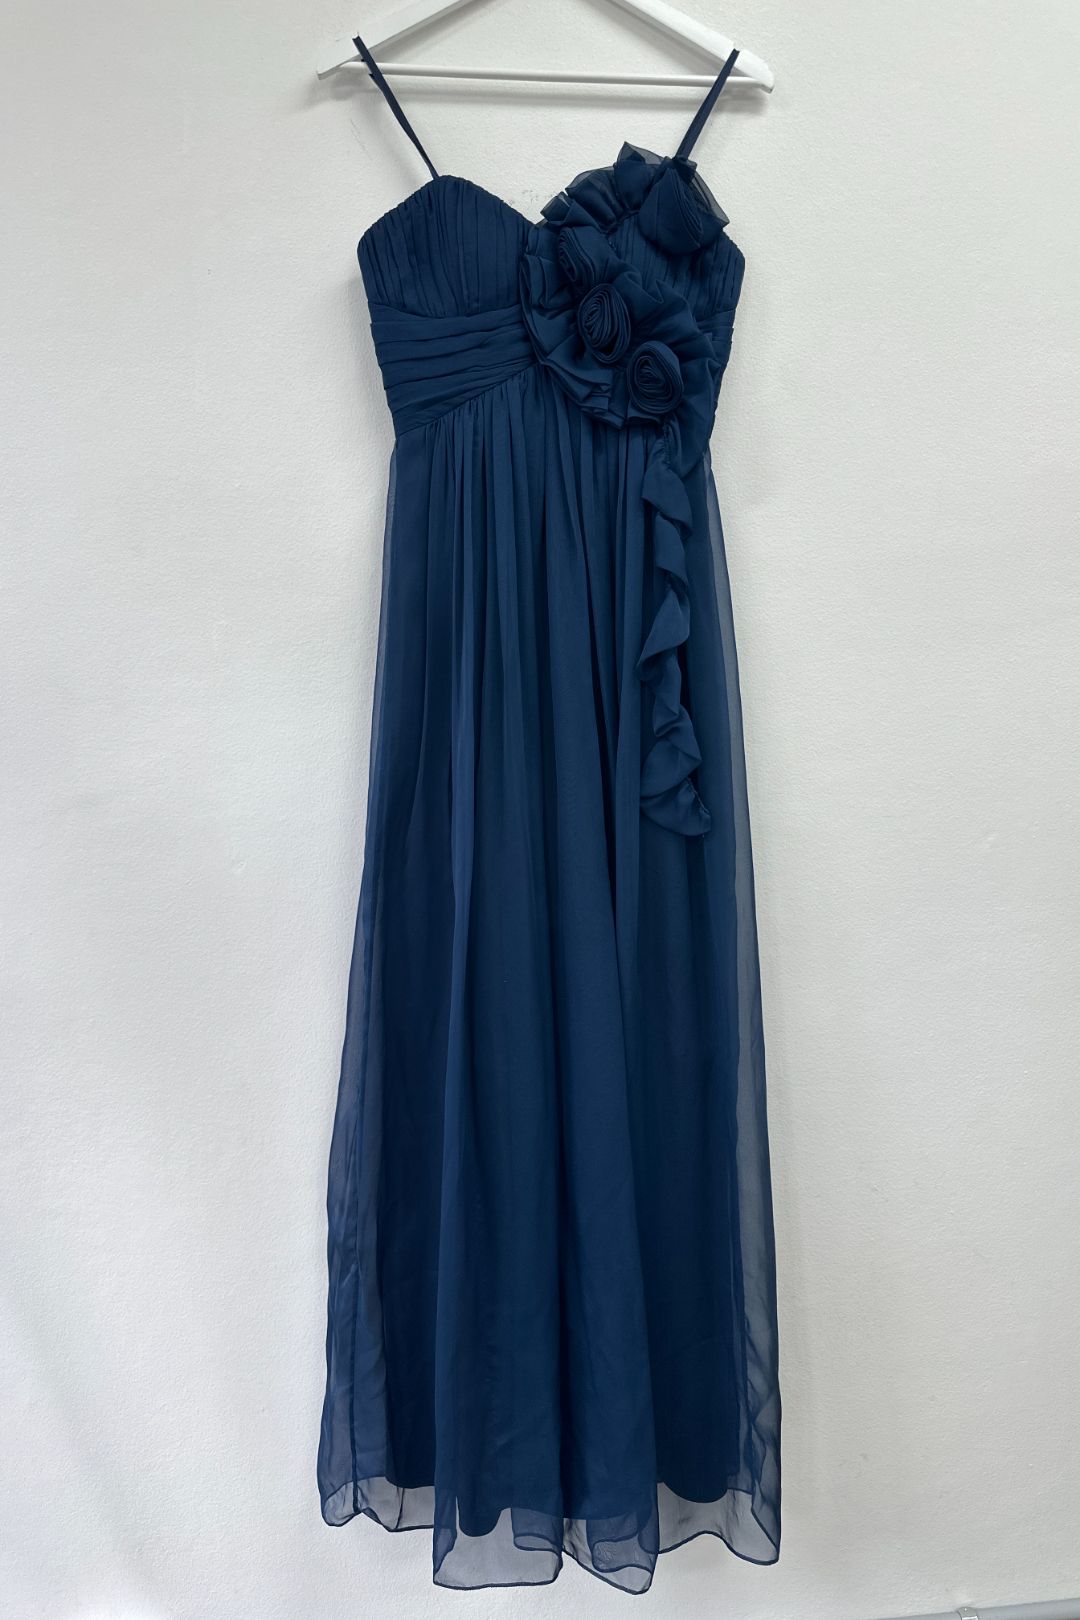 Bariano Blue Strapless Sweetheart Neckline Formal Dress